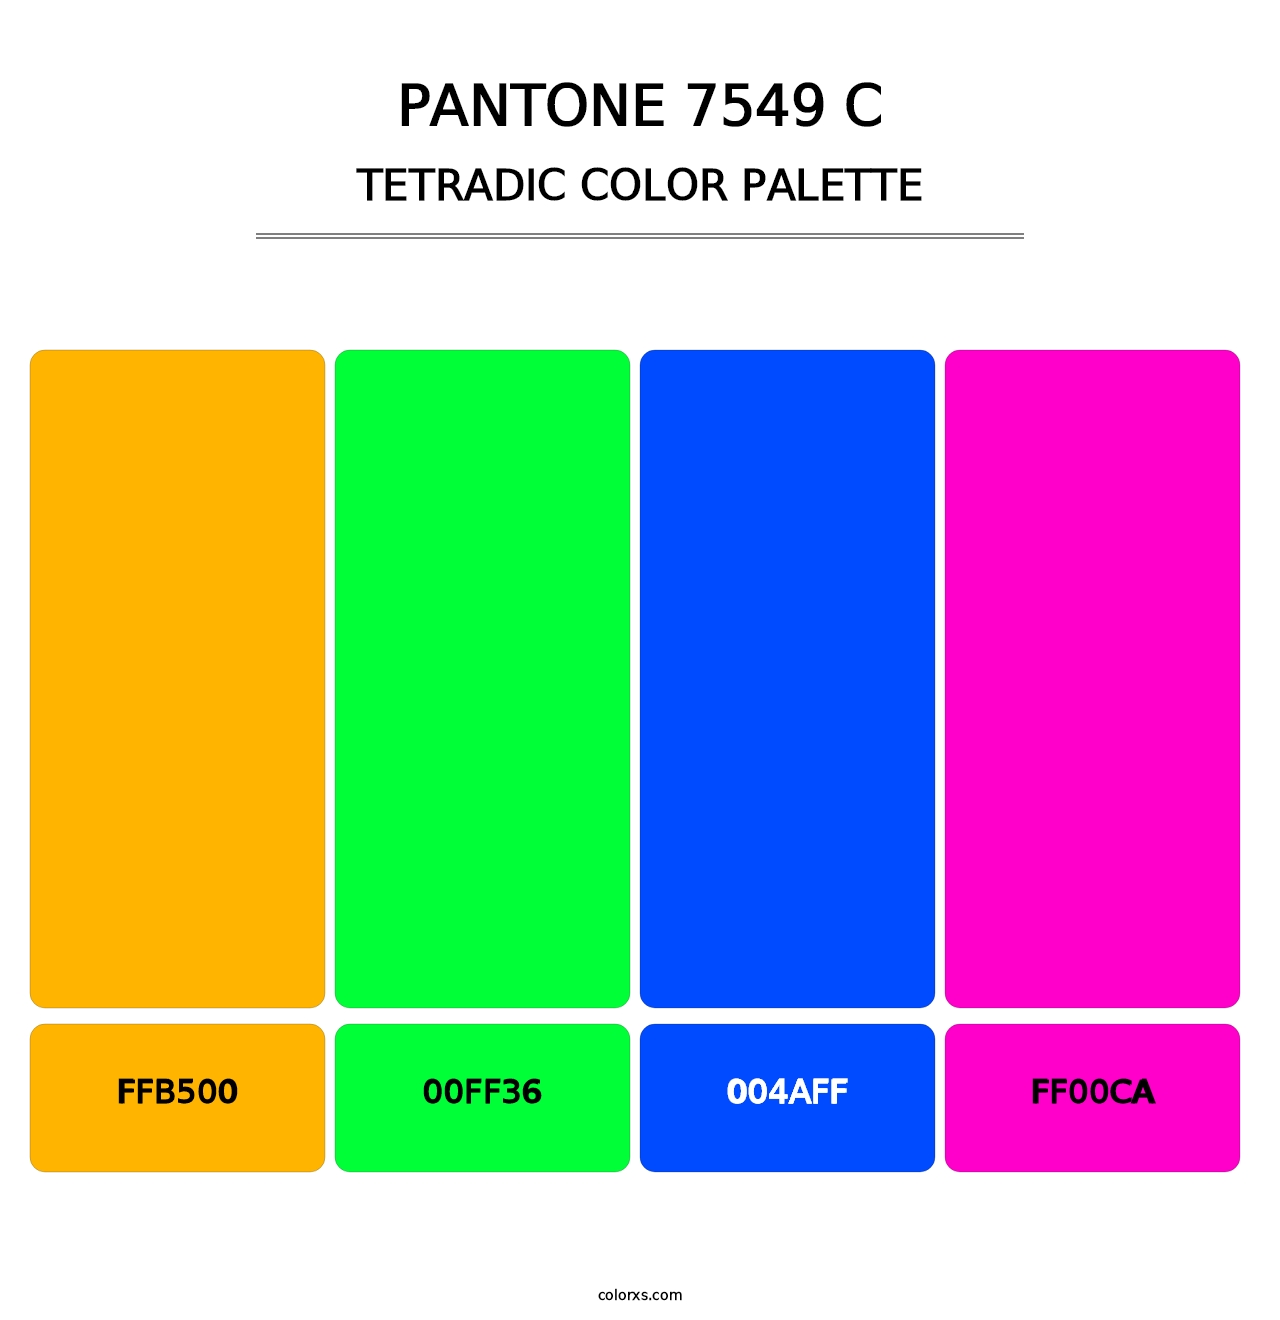 PANTONE 7549 C - Tetradic Color Palette